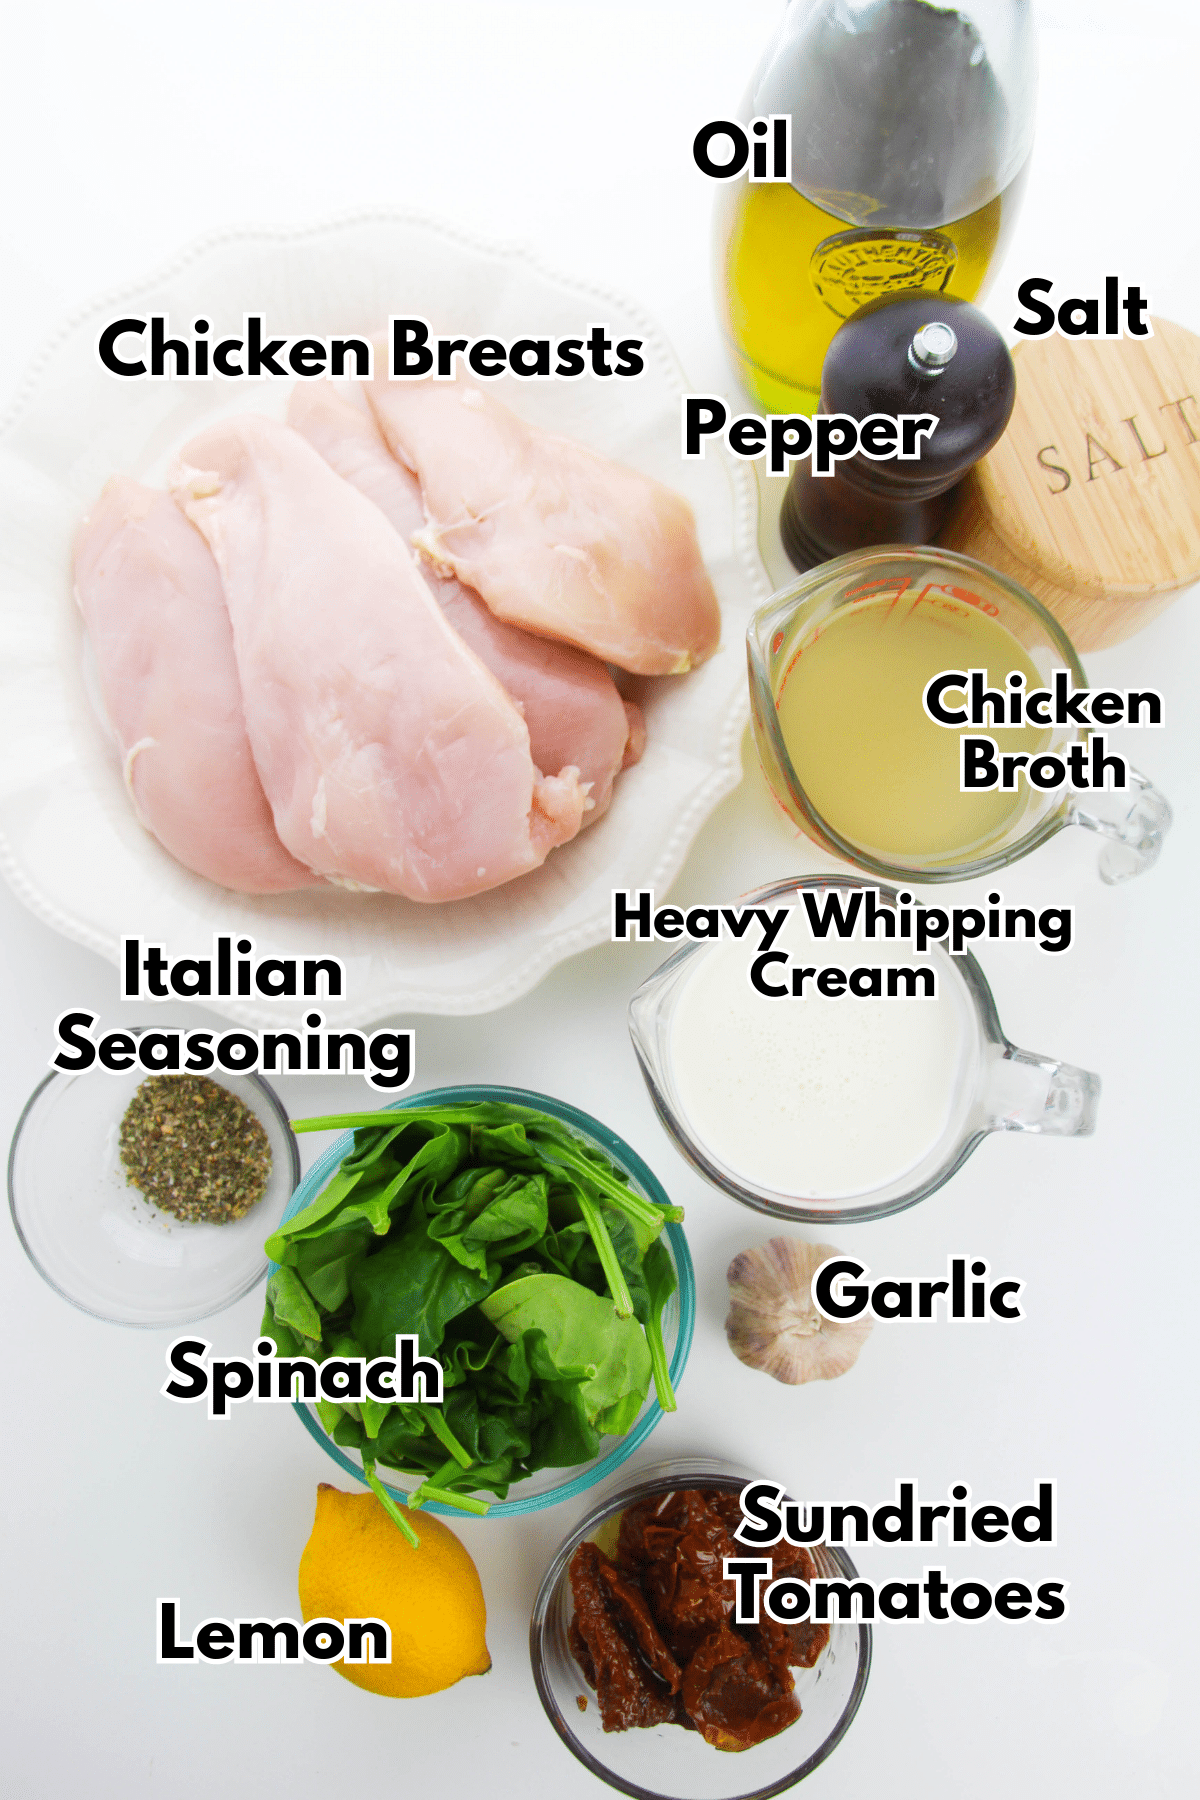 Tuscan Chicken Recipe ingredients.